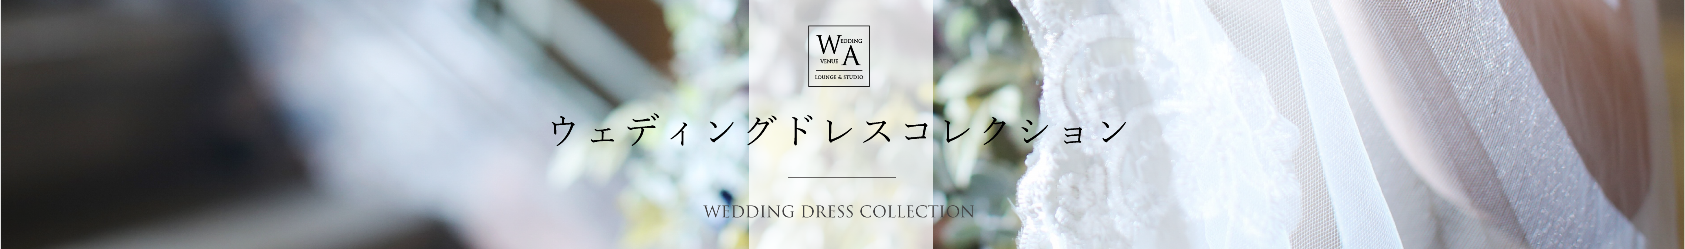 wedding dress collection